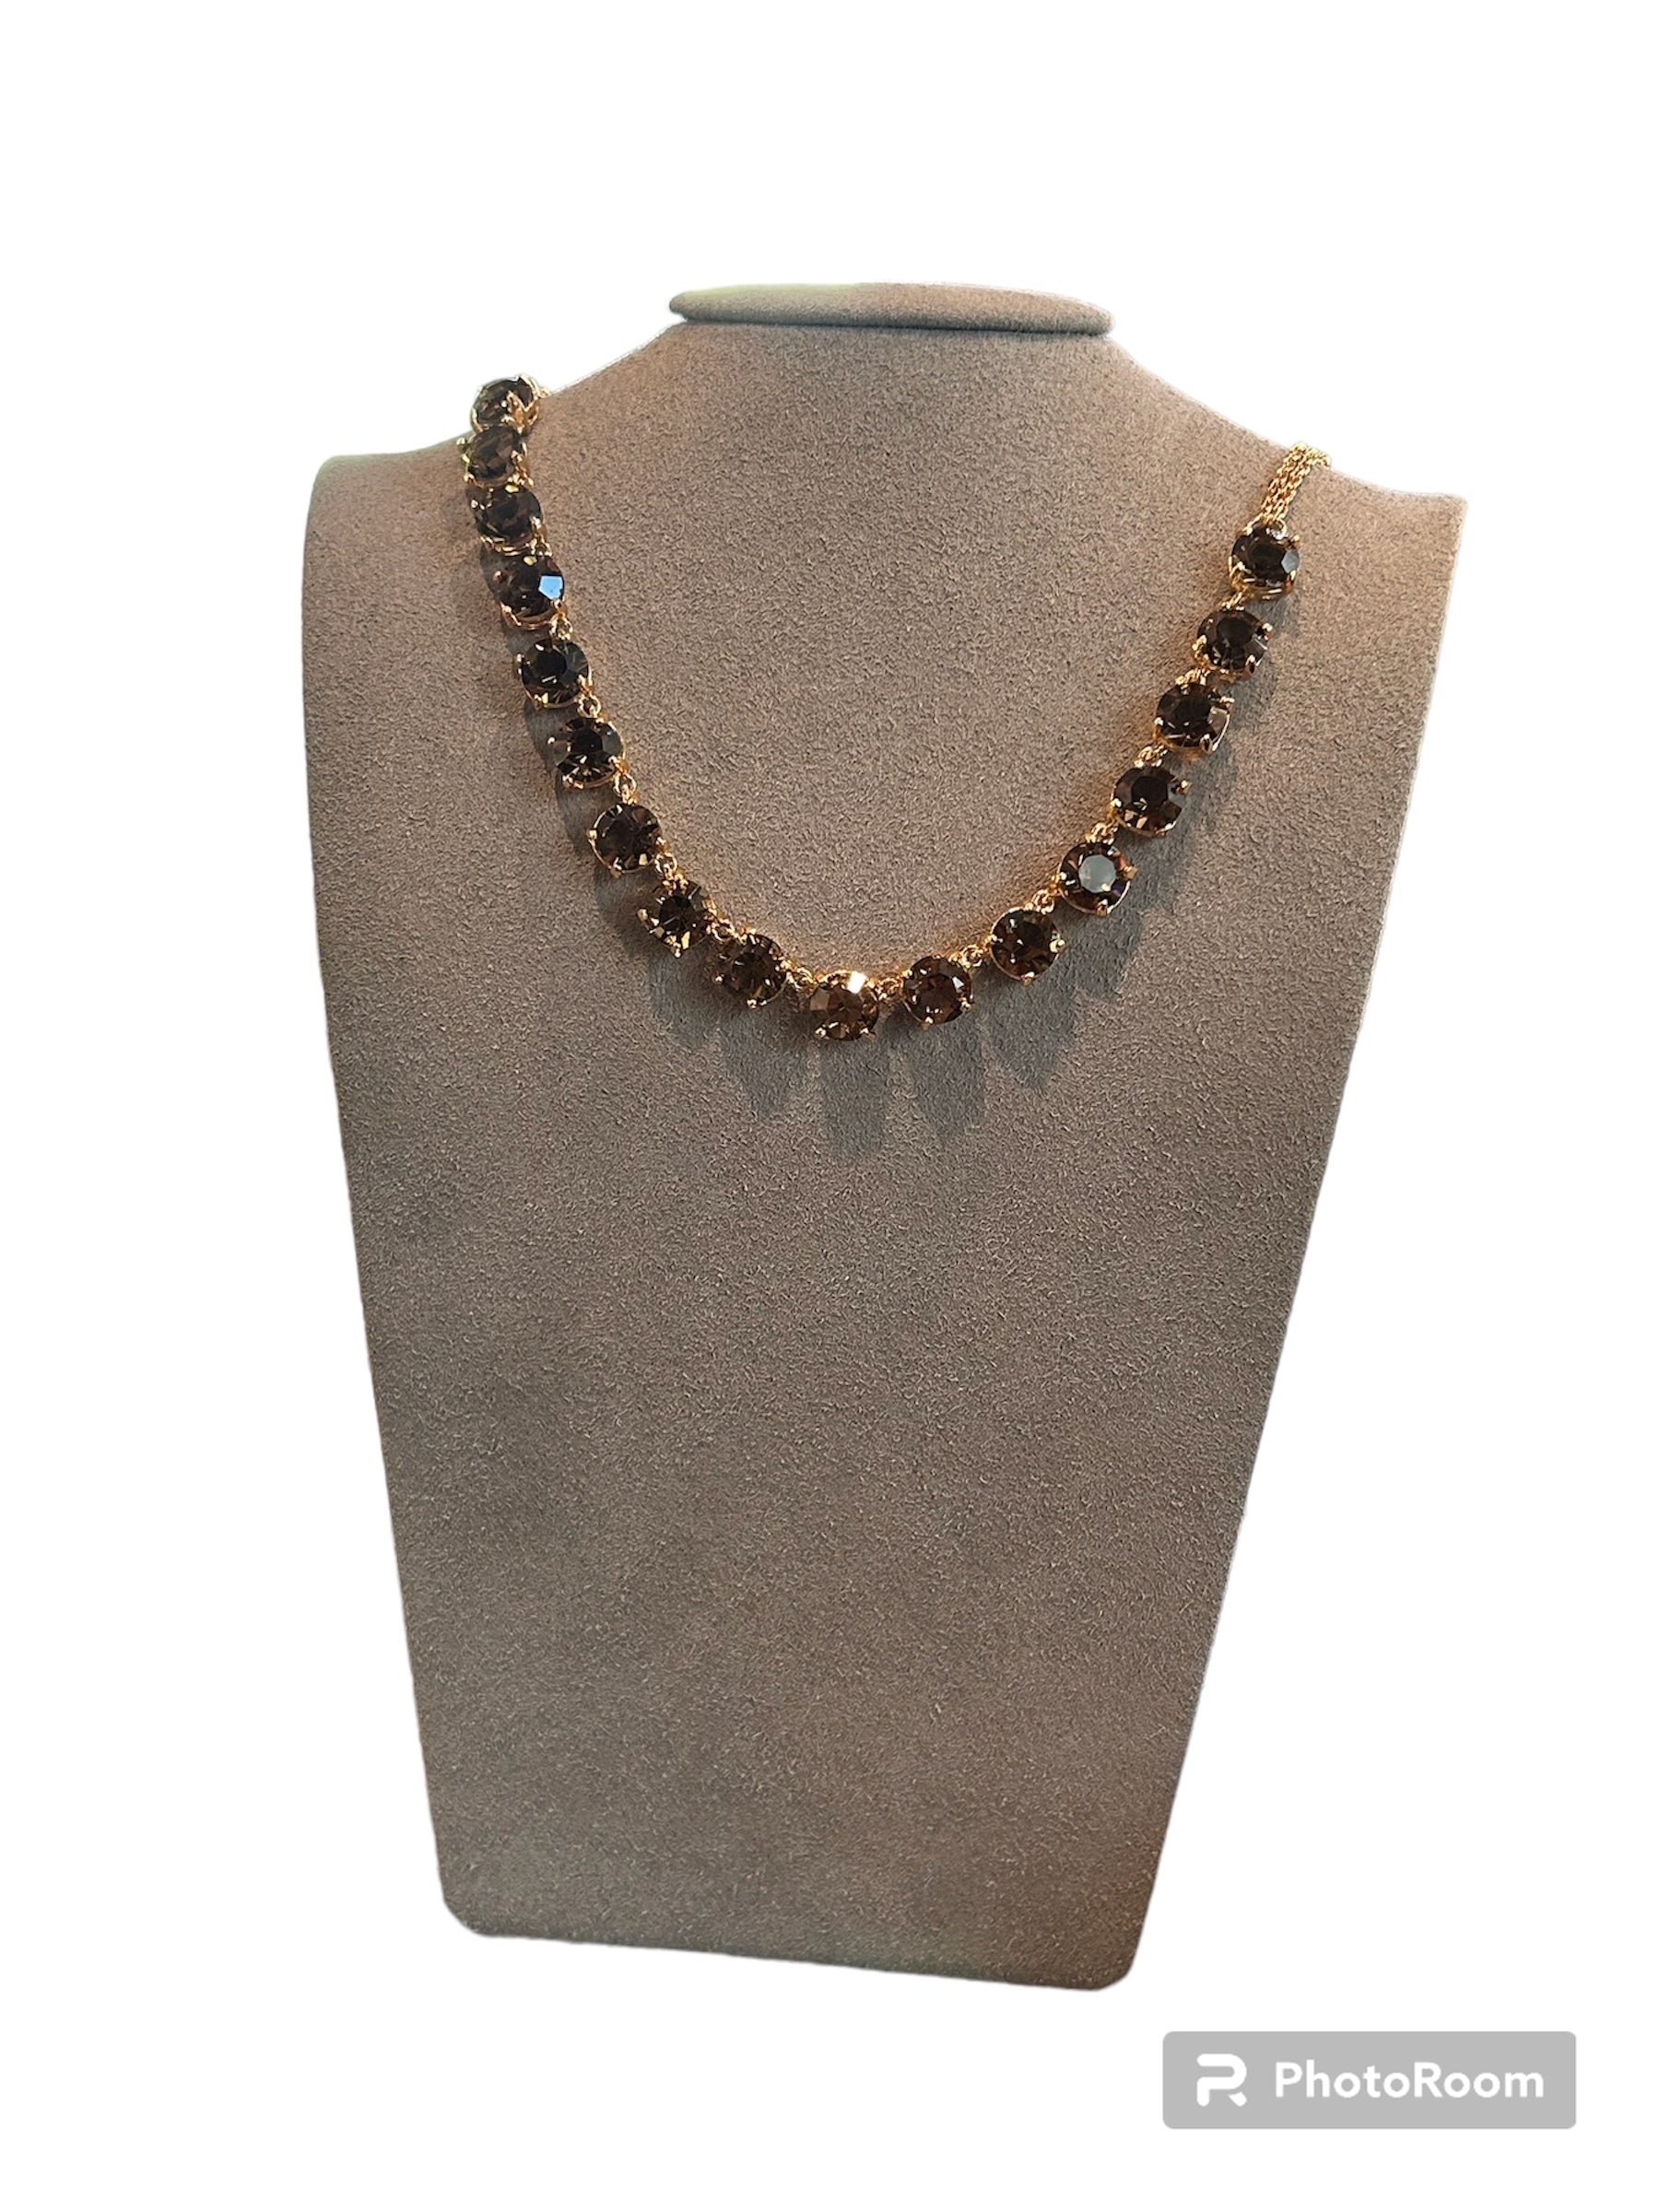 IL Mio Re - Gilt bronze necklace with smoky stones - ILMIORE CL 019